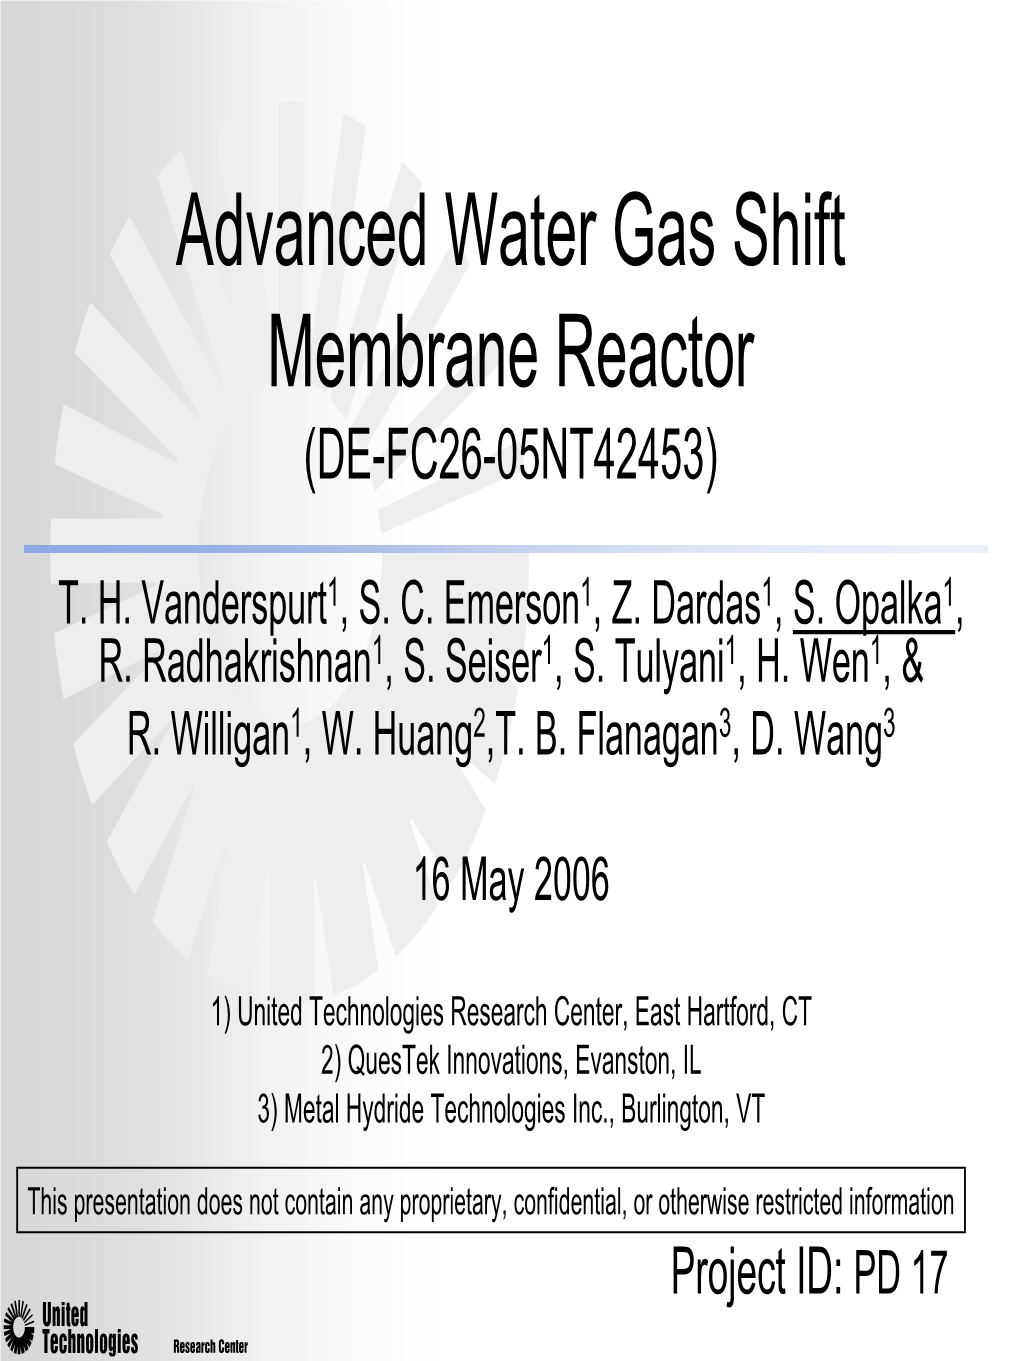 Advanced Water Gas Shift Membrane Reactor (DE-FC26-05NT42453)